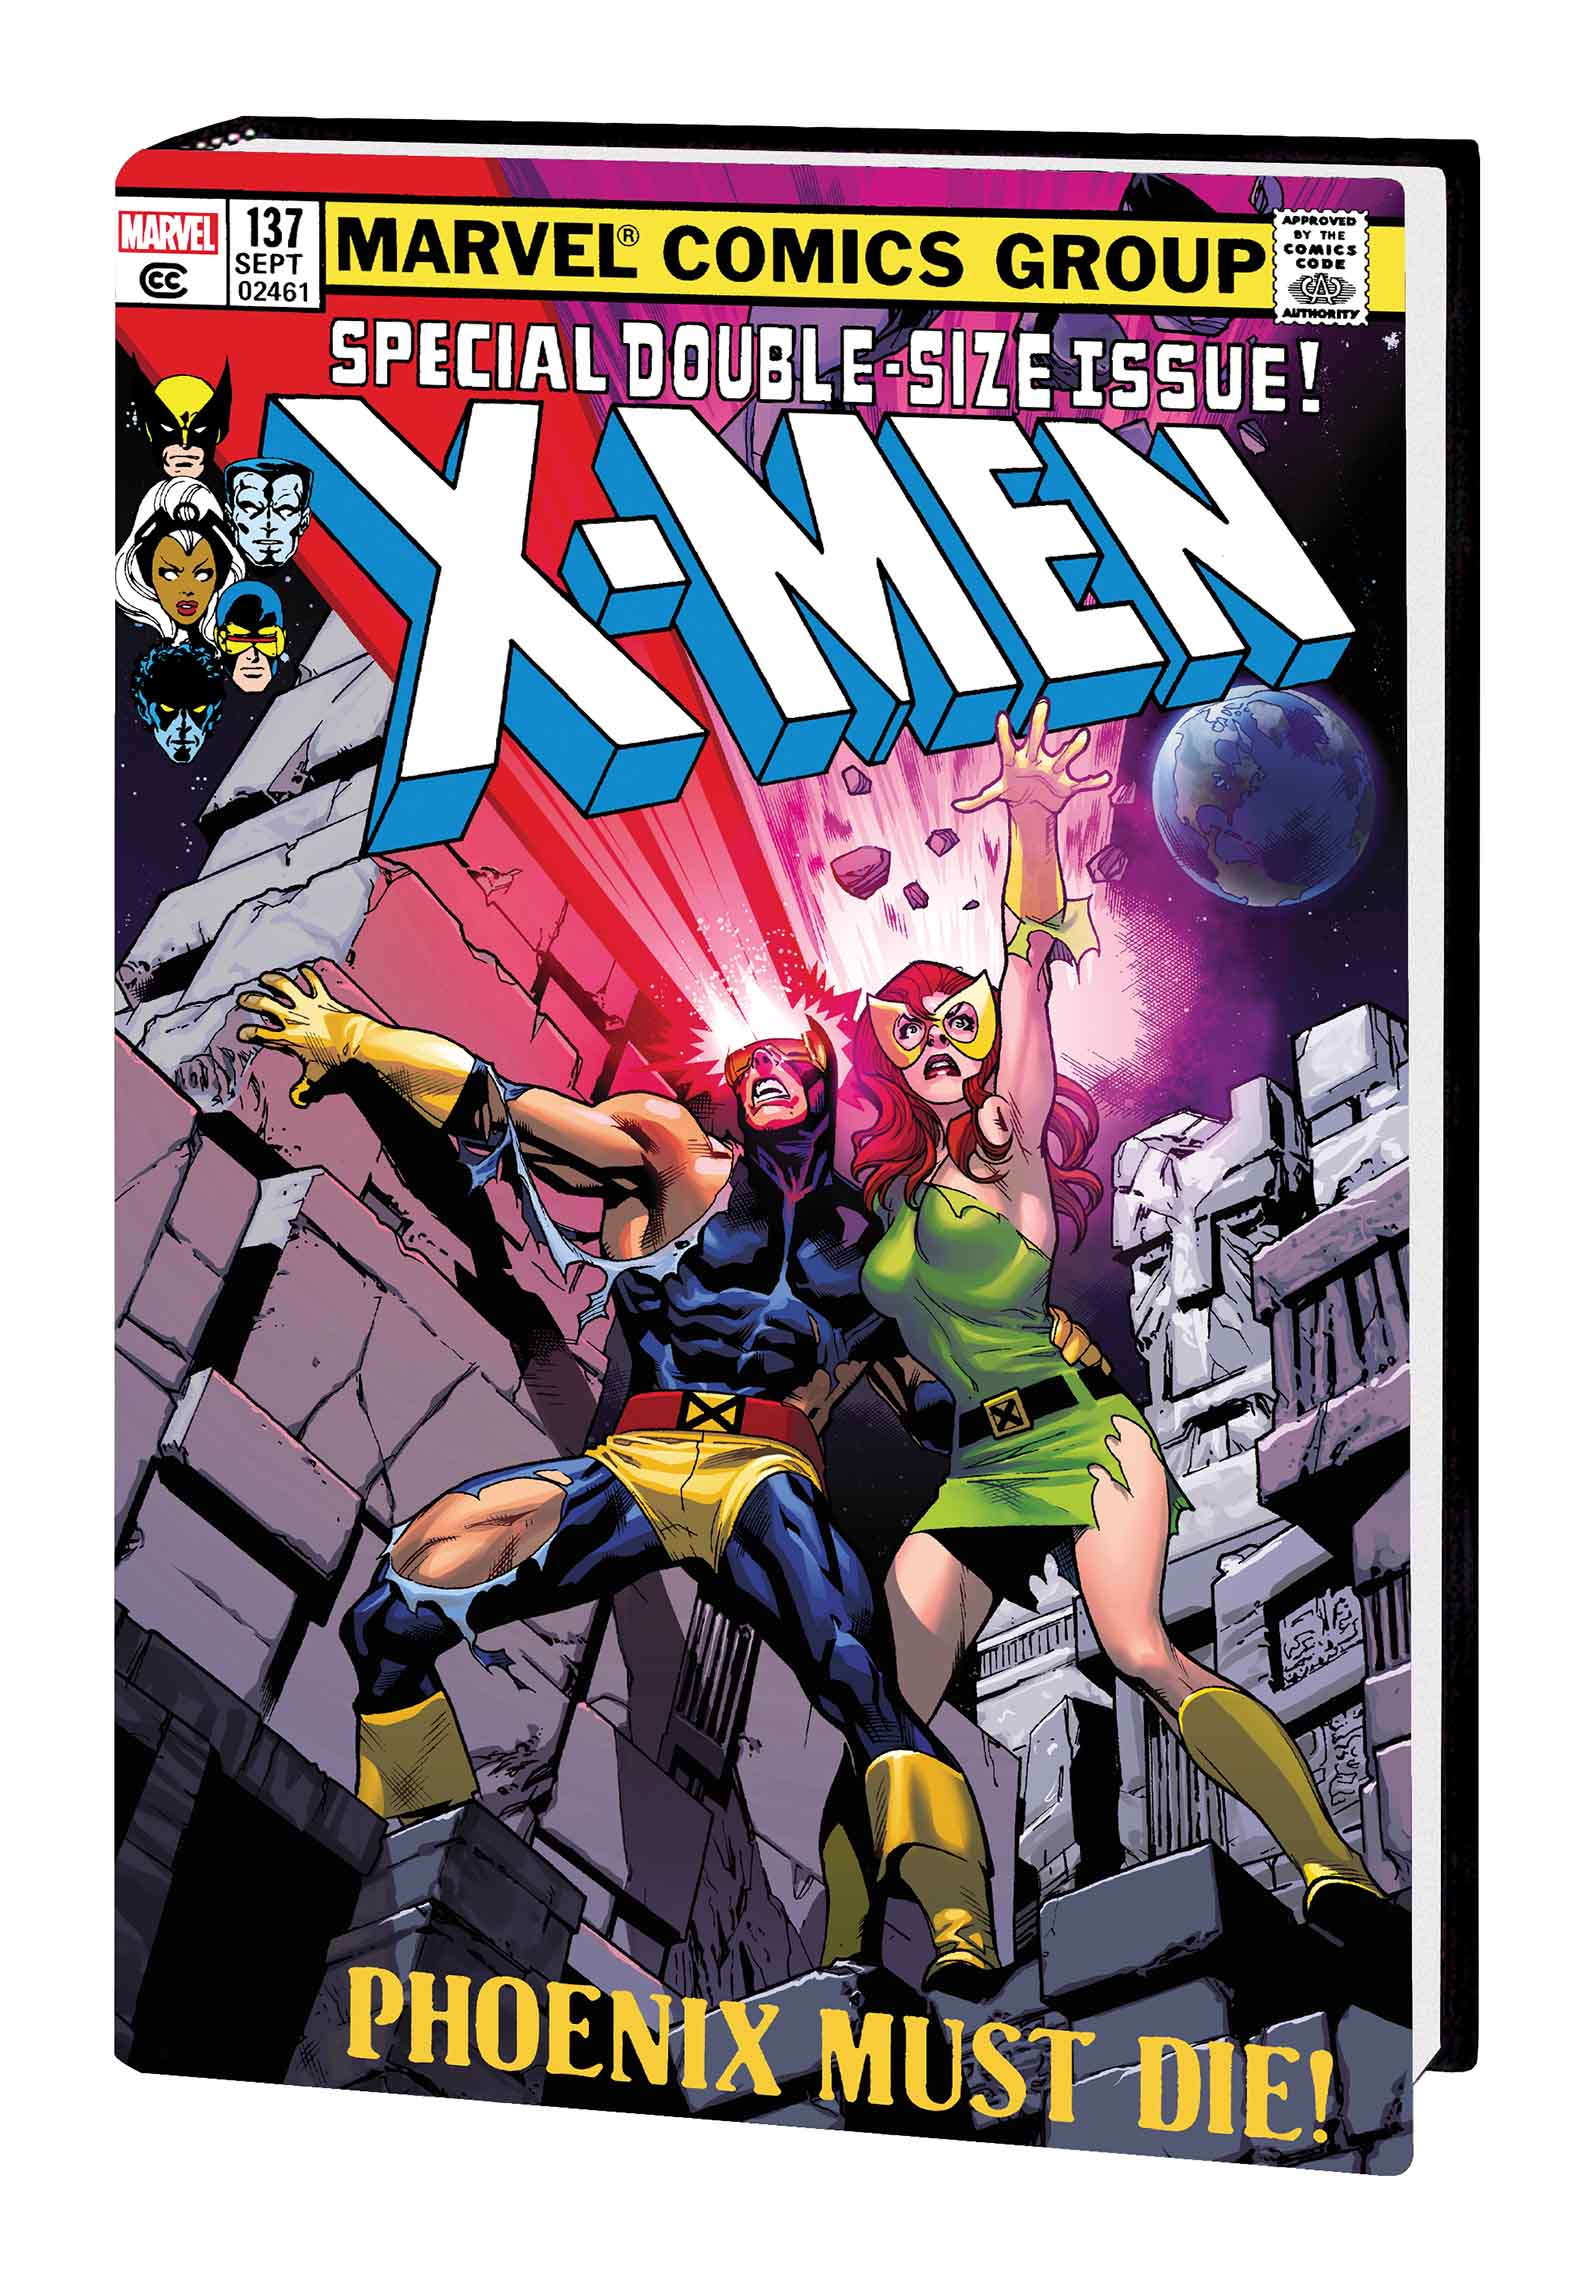 THE UNCANNY X-MEN OMNIBUS VOL. 2 HC IMMONEN COVER (Hardcover)